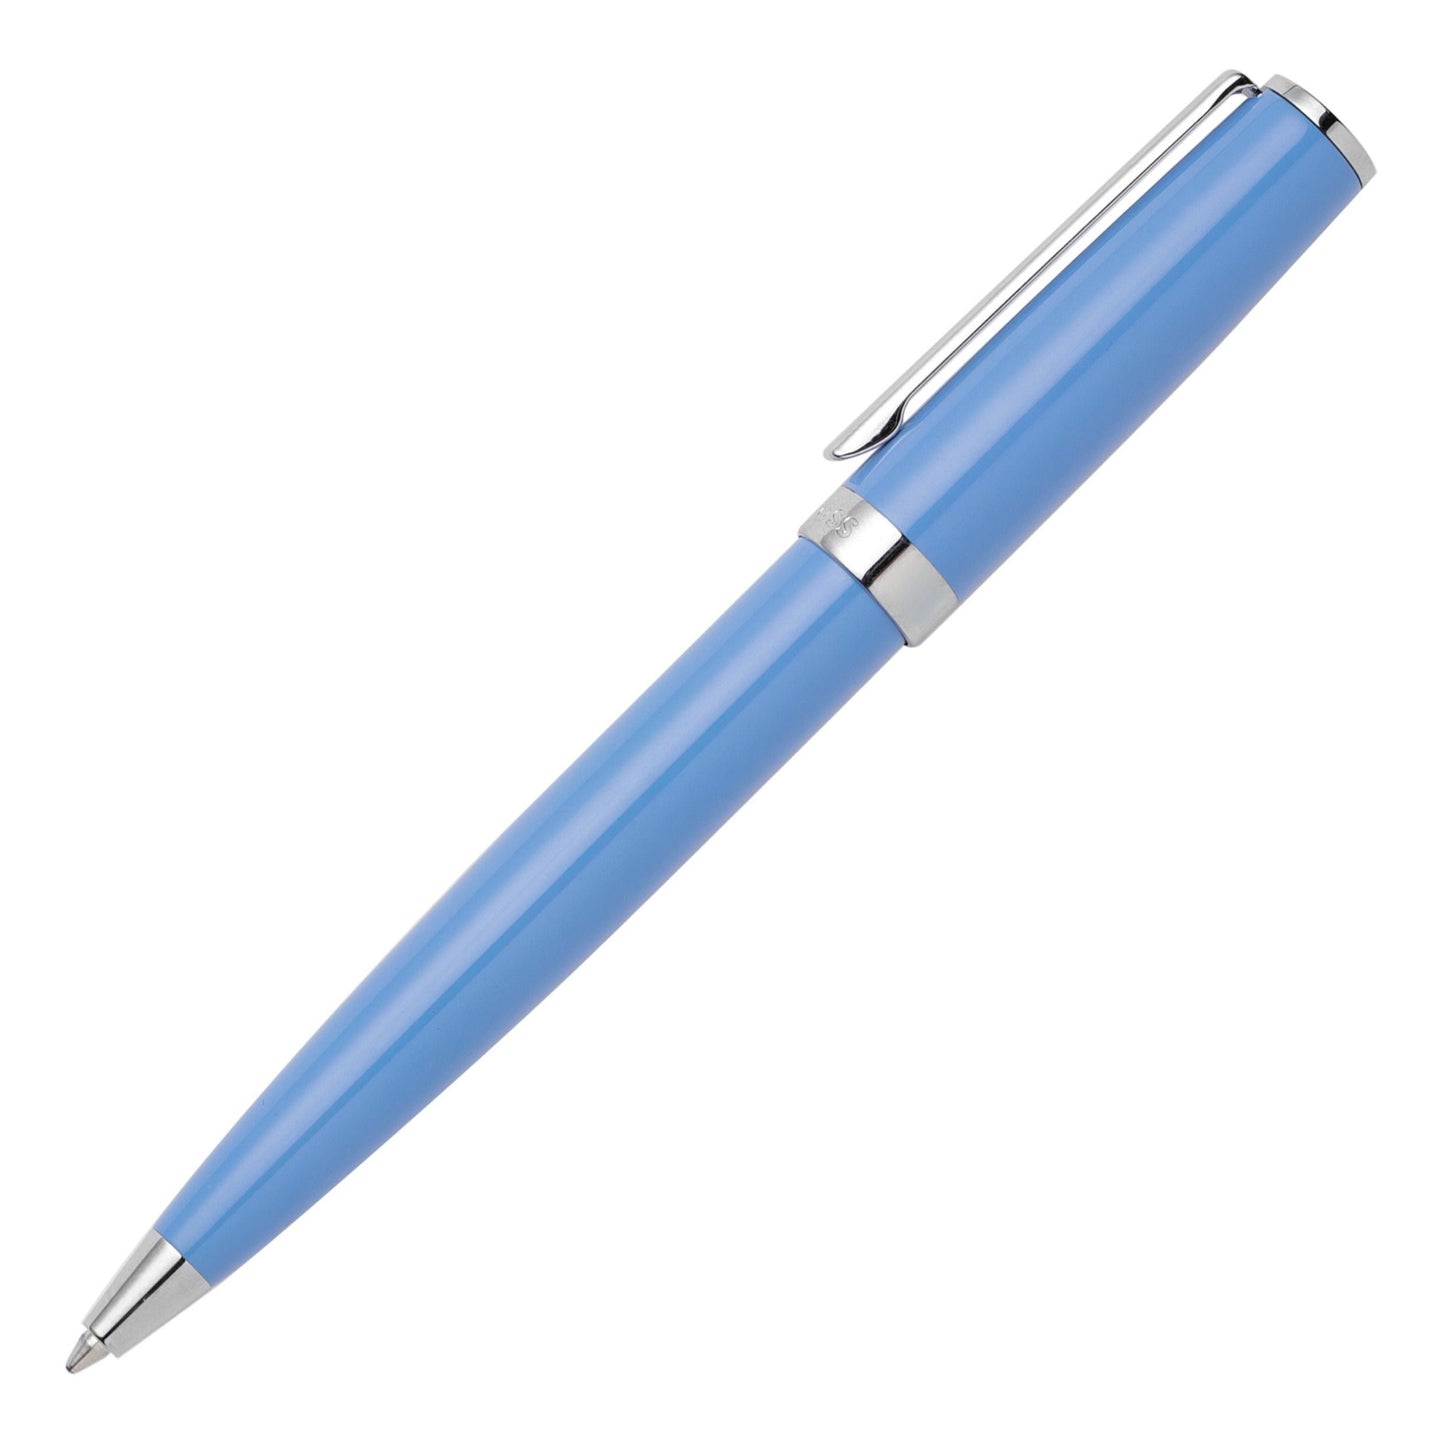 Hugo Boss Sky Blue & Chrome Classic Polished Ballpoint Pen